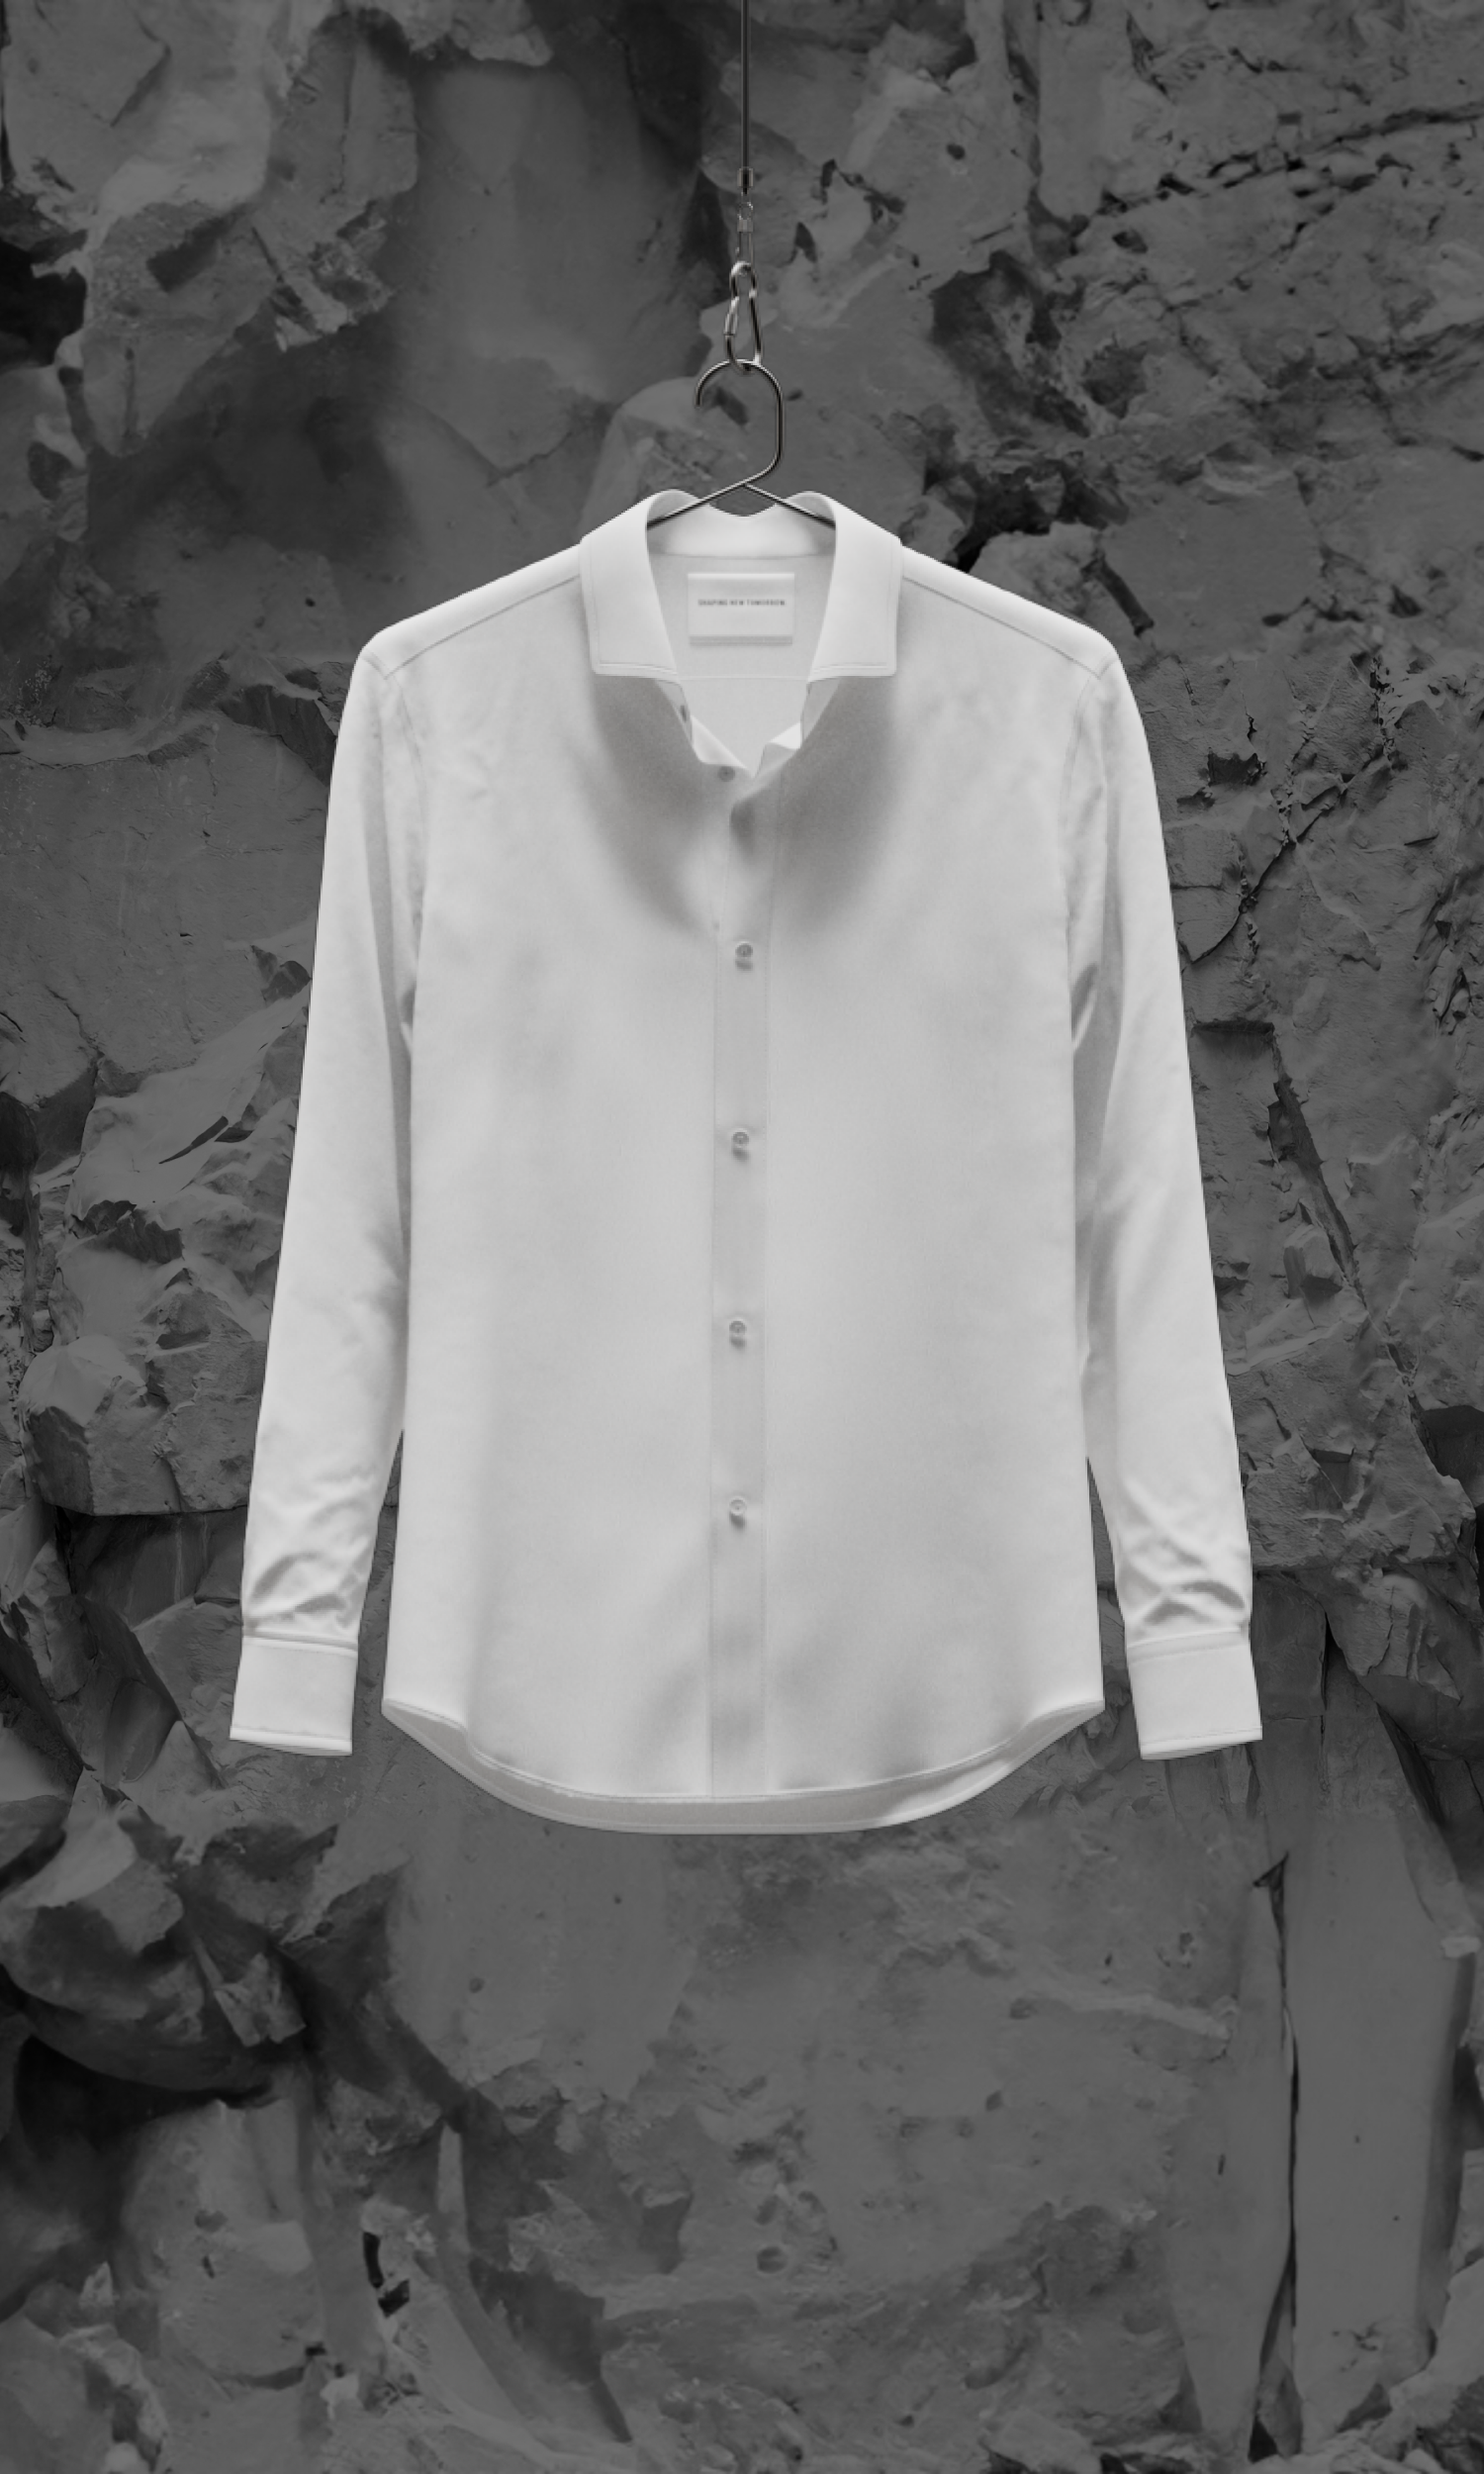 A white shirt on a hanger